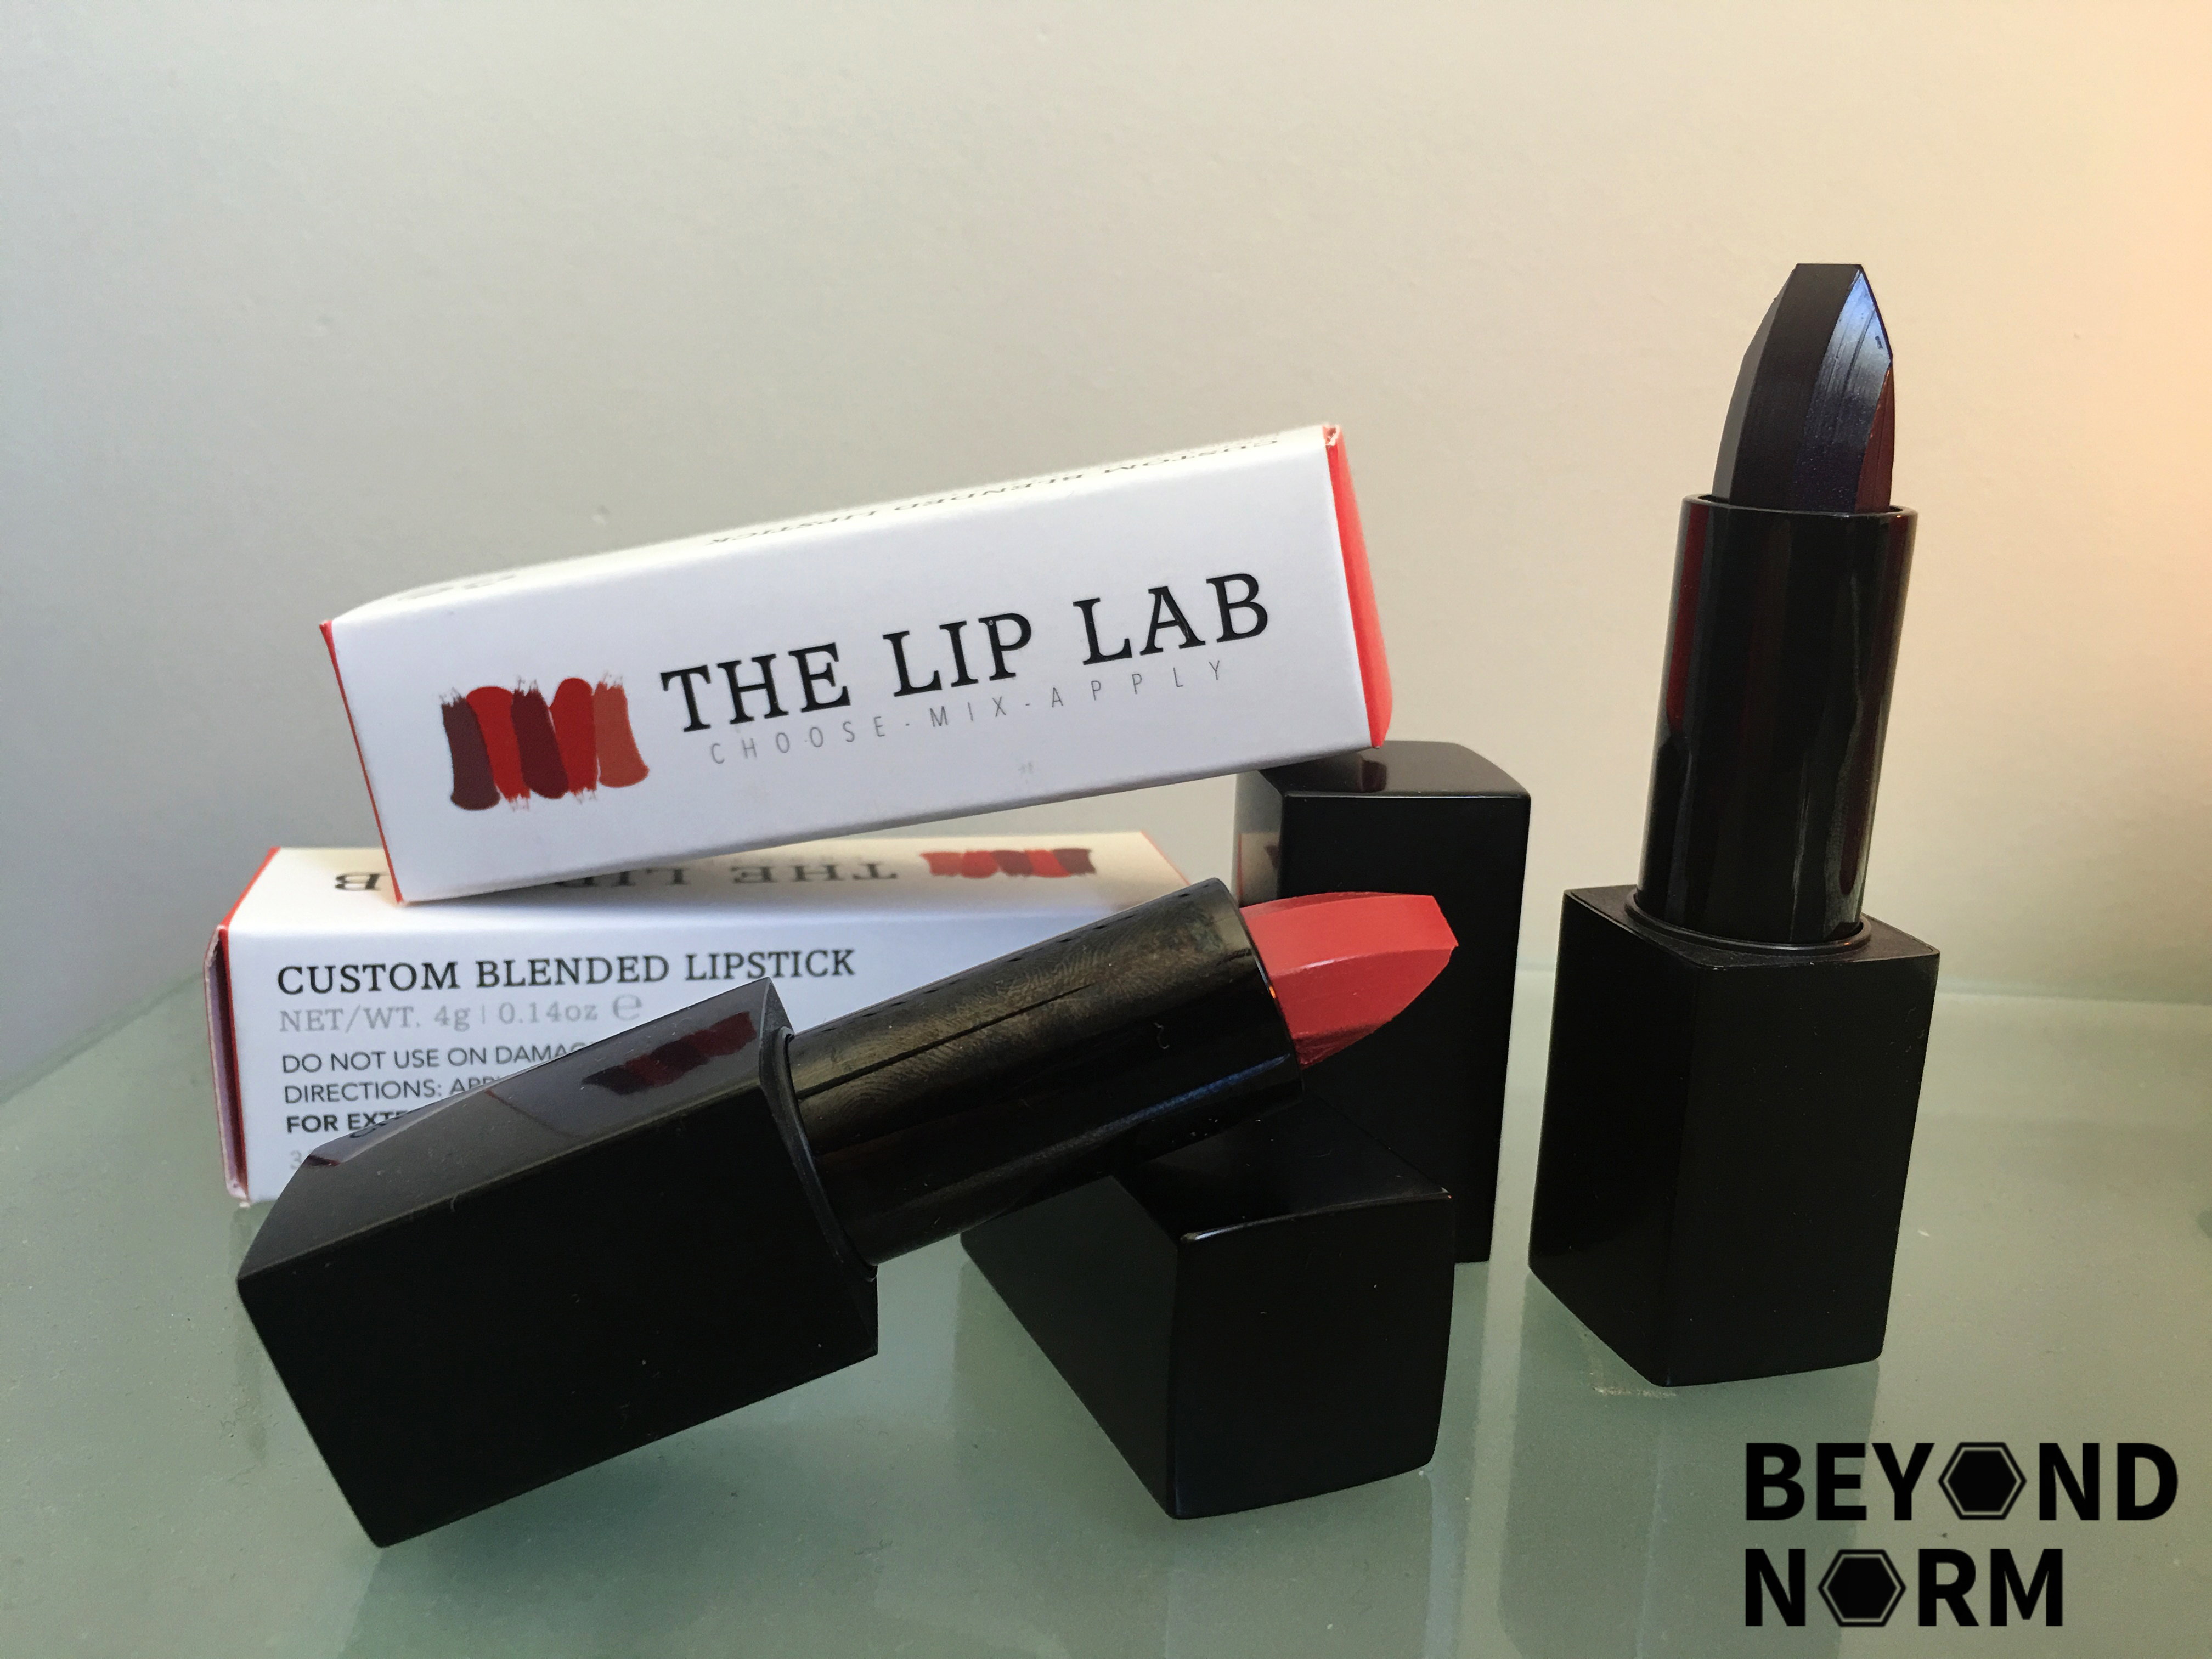 The lip lab